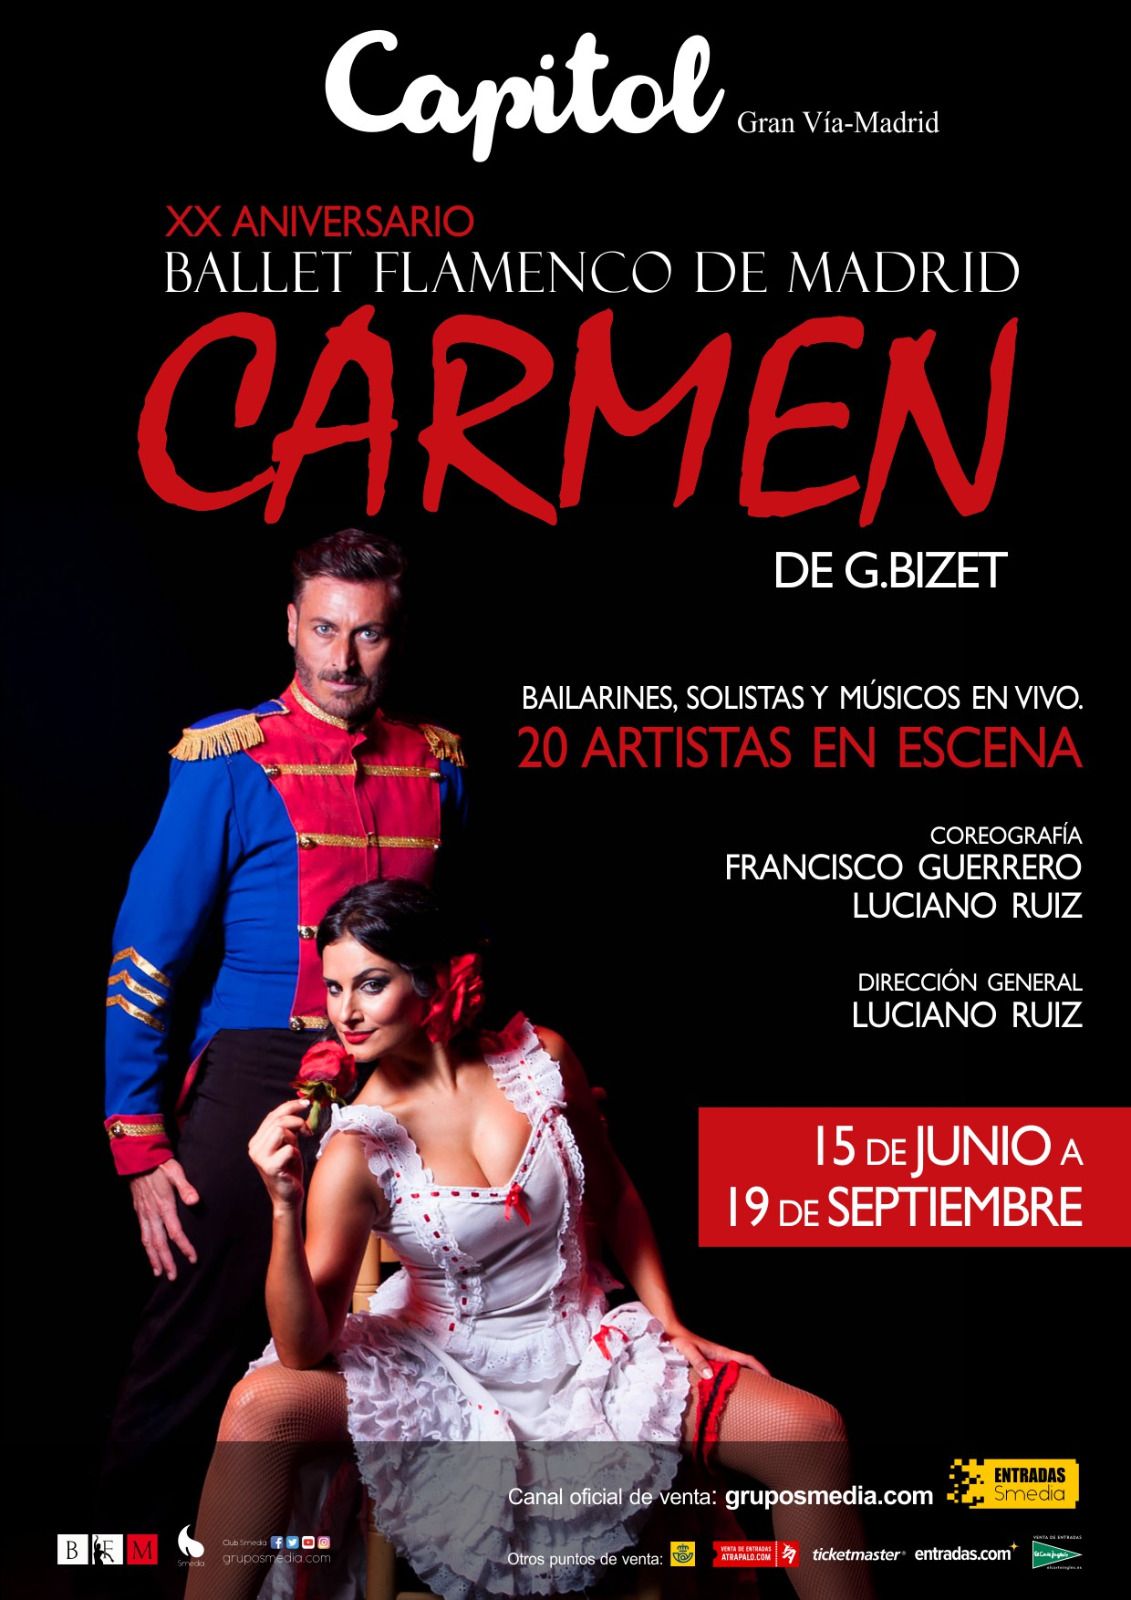 CARMEN DE BIZET - Ballet Flamenco de Madrid en el Teatro Capitol Gran Vía